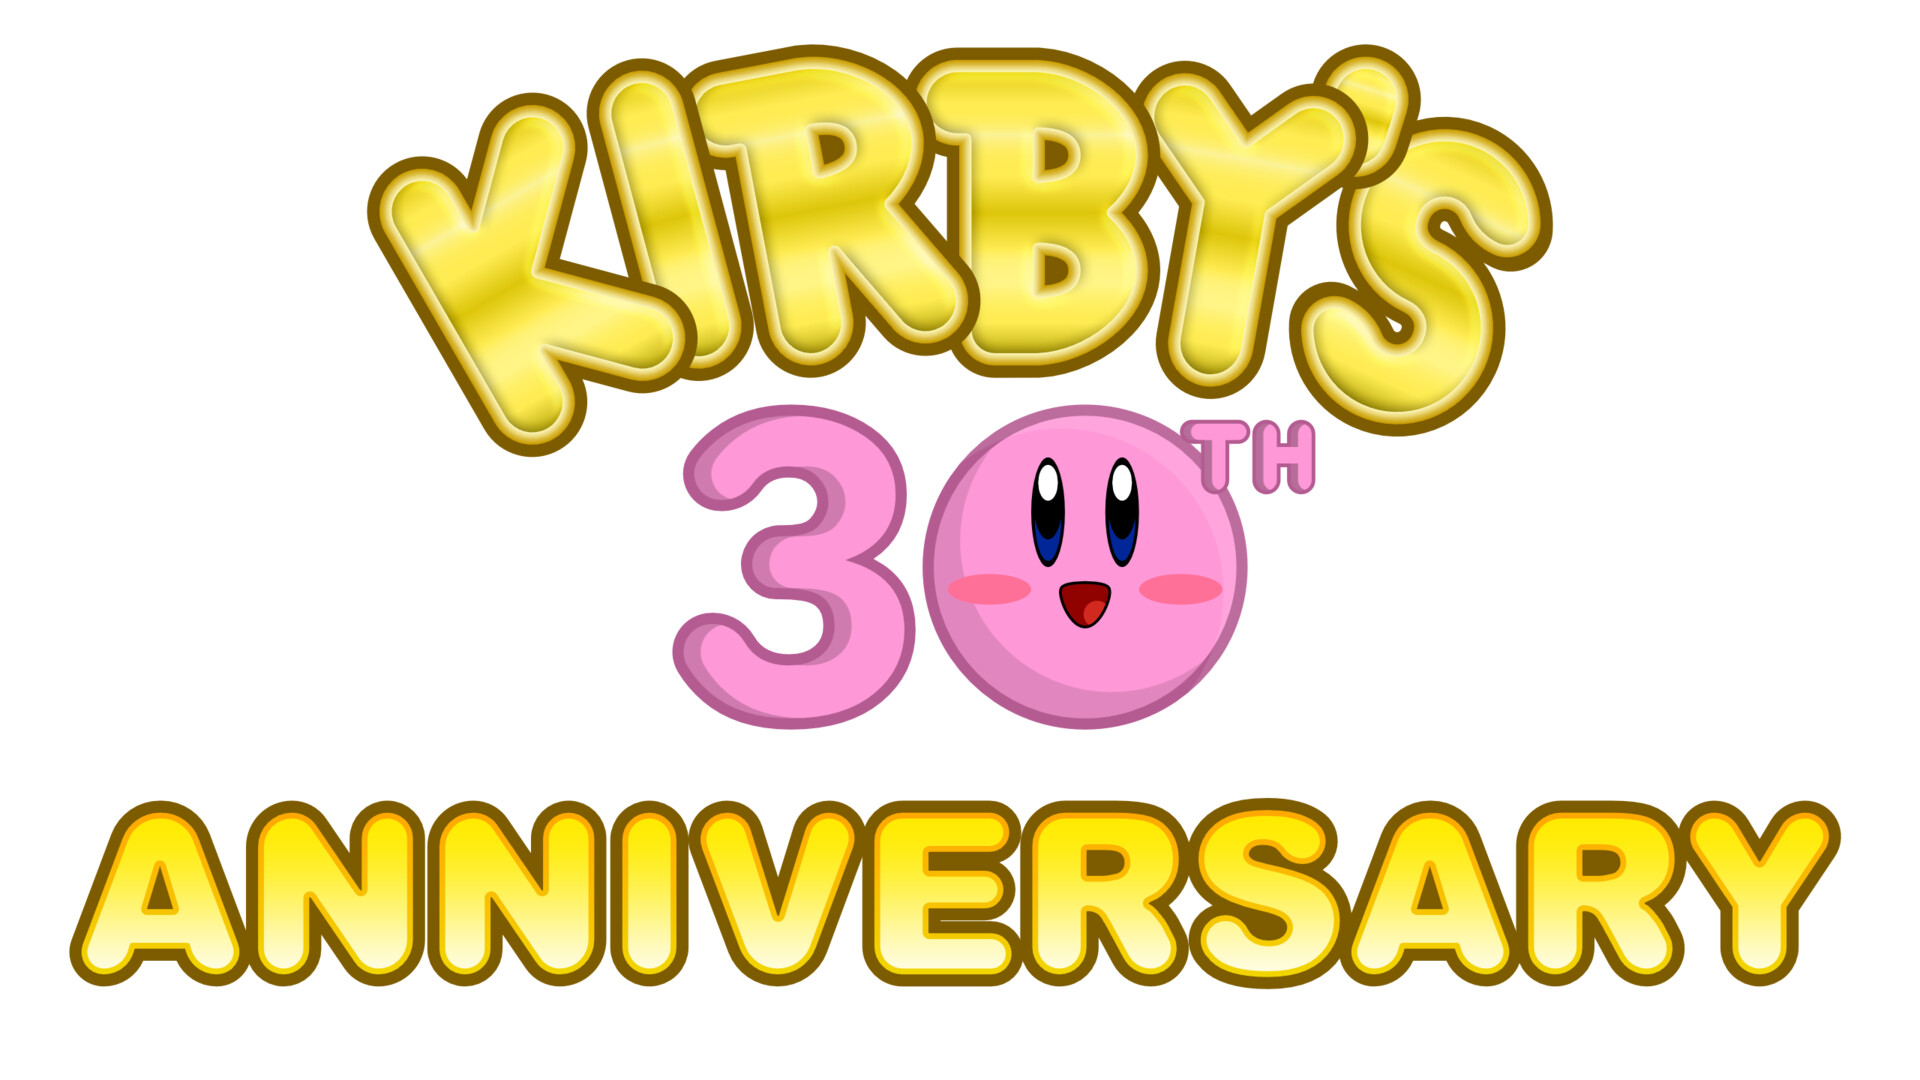 Kirby's Adventure 30th Anniversary